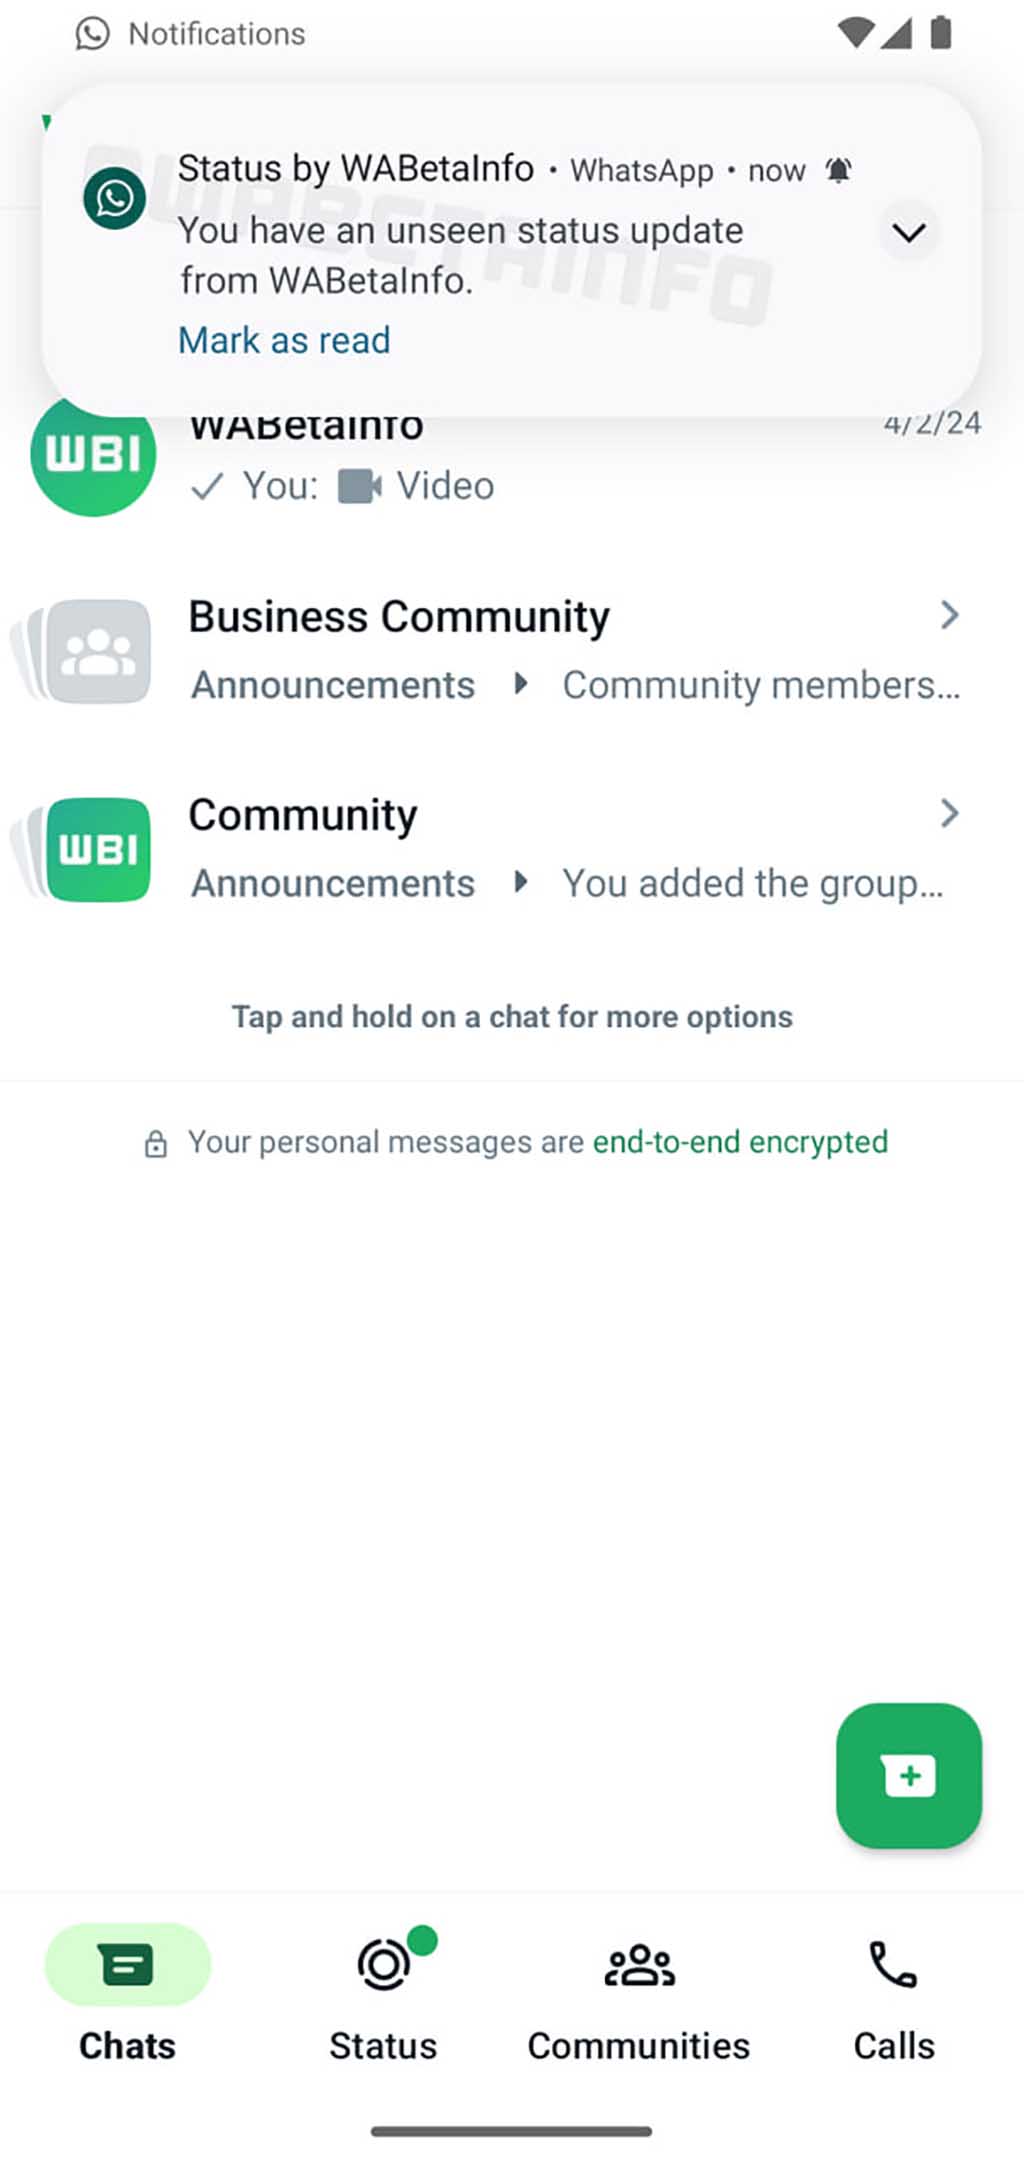 WhatsApp status notification feature